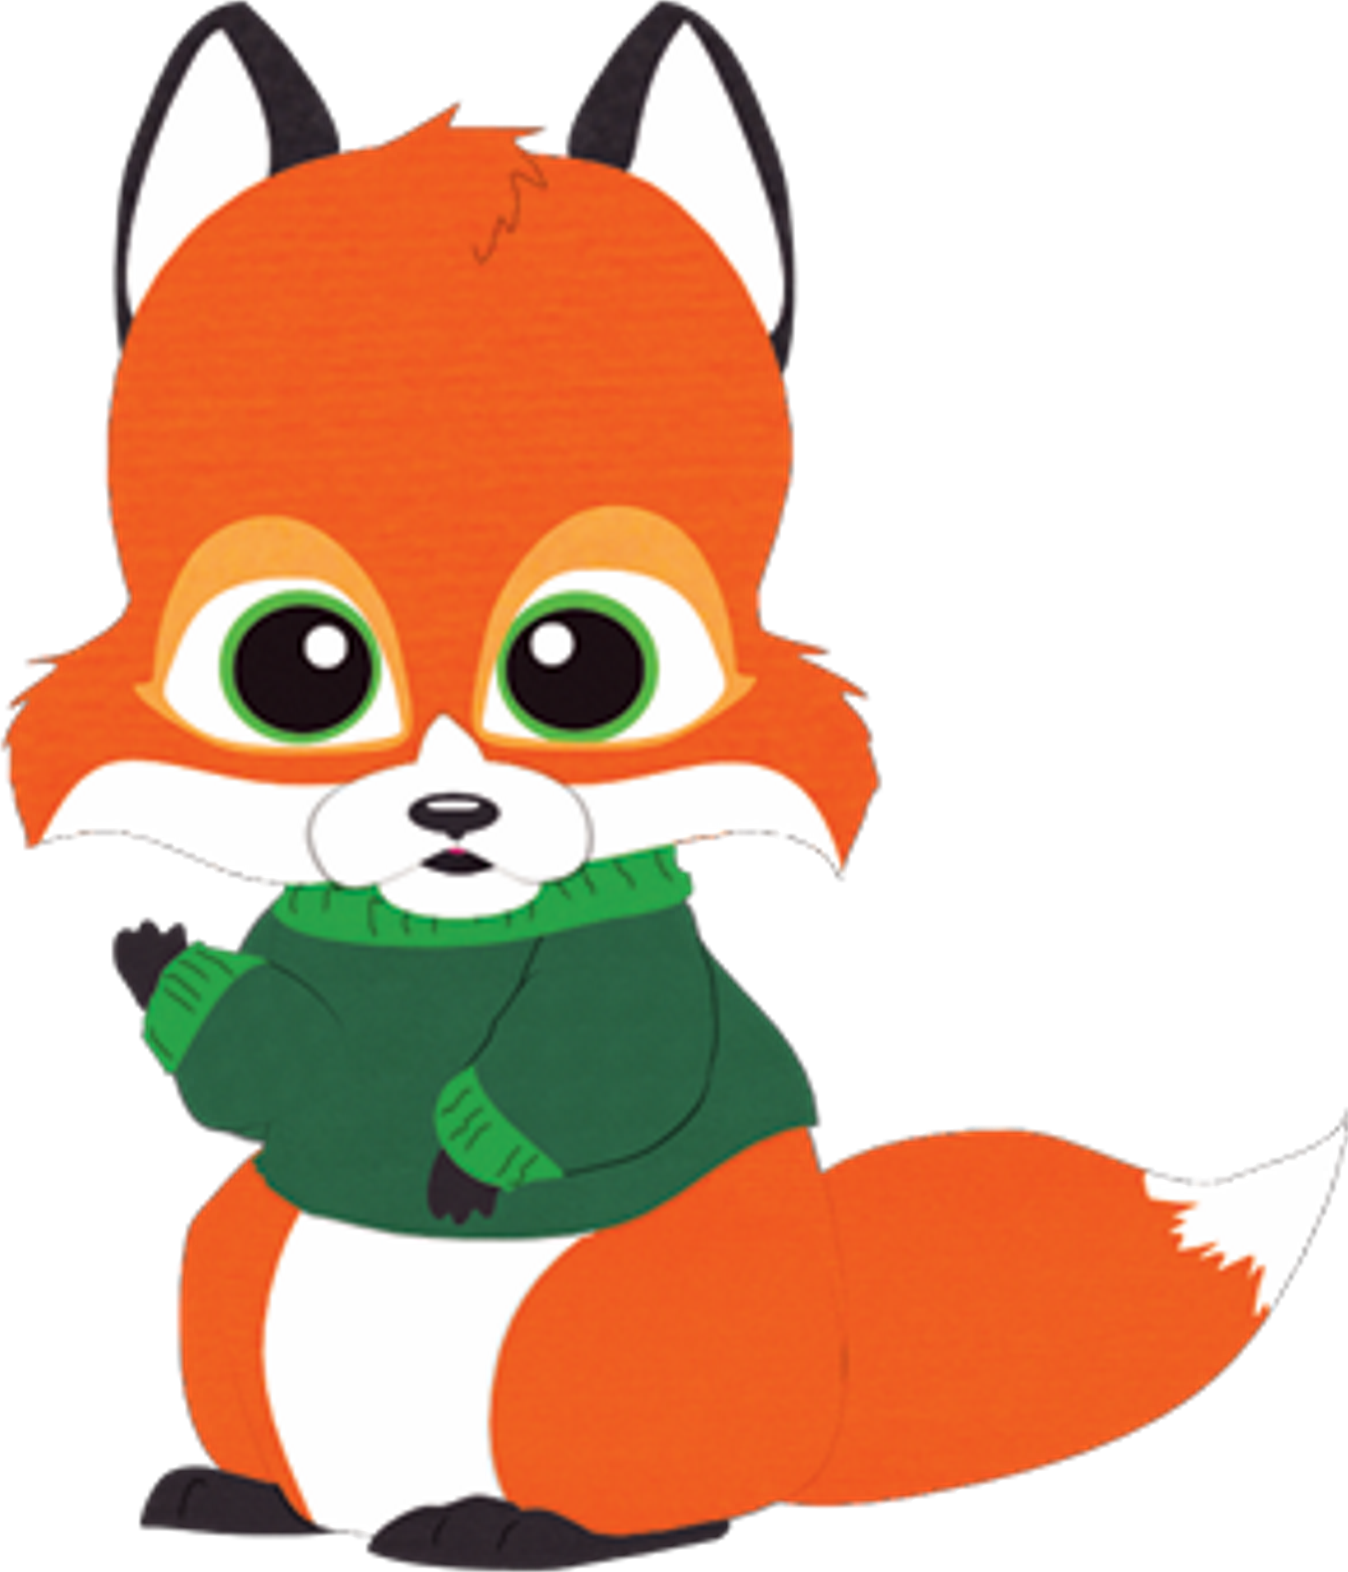 Foxy Is A Small Orange Fox Who Wears A Green Sweater, - South Park Foxy (1348x1572)